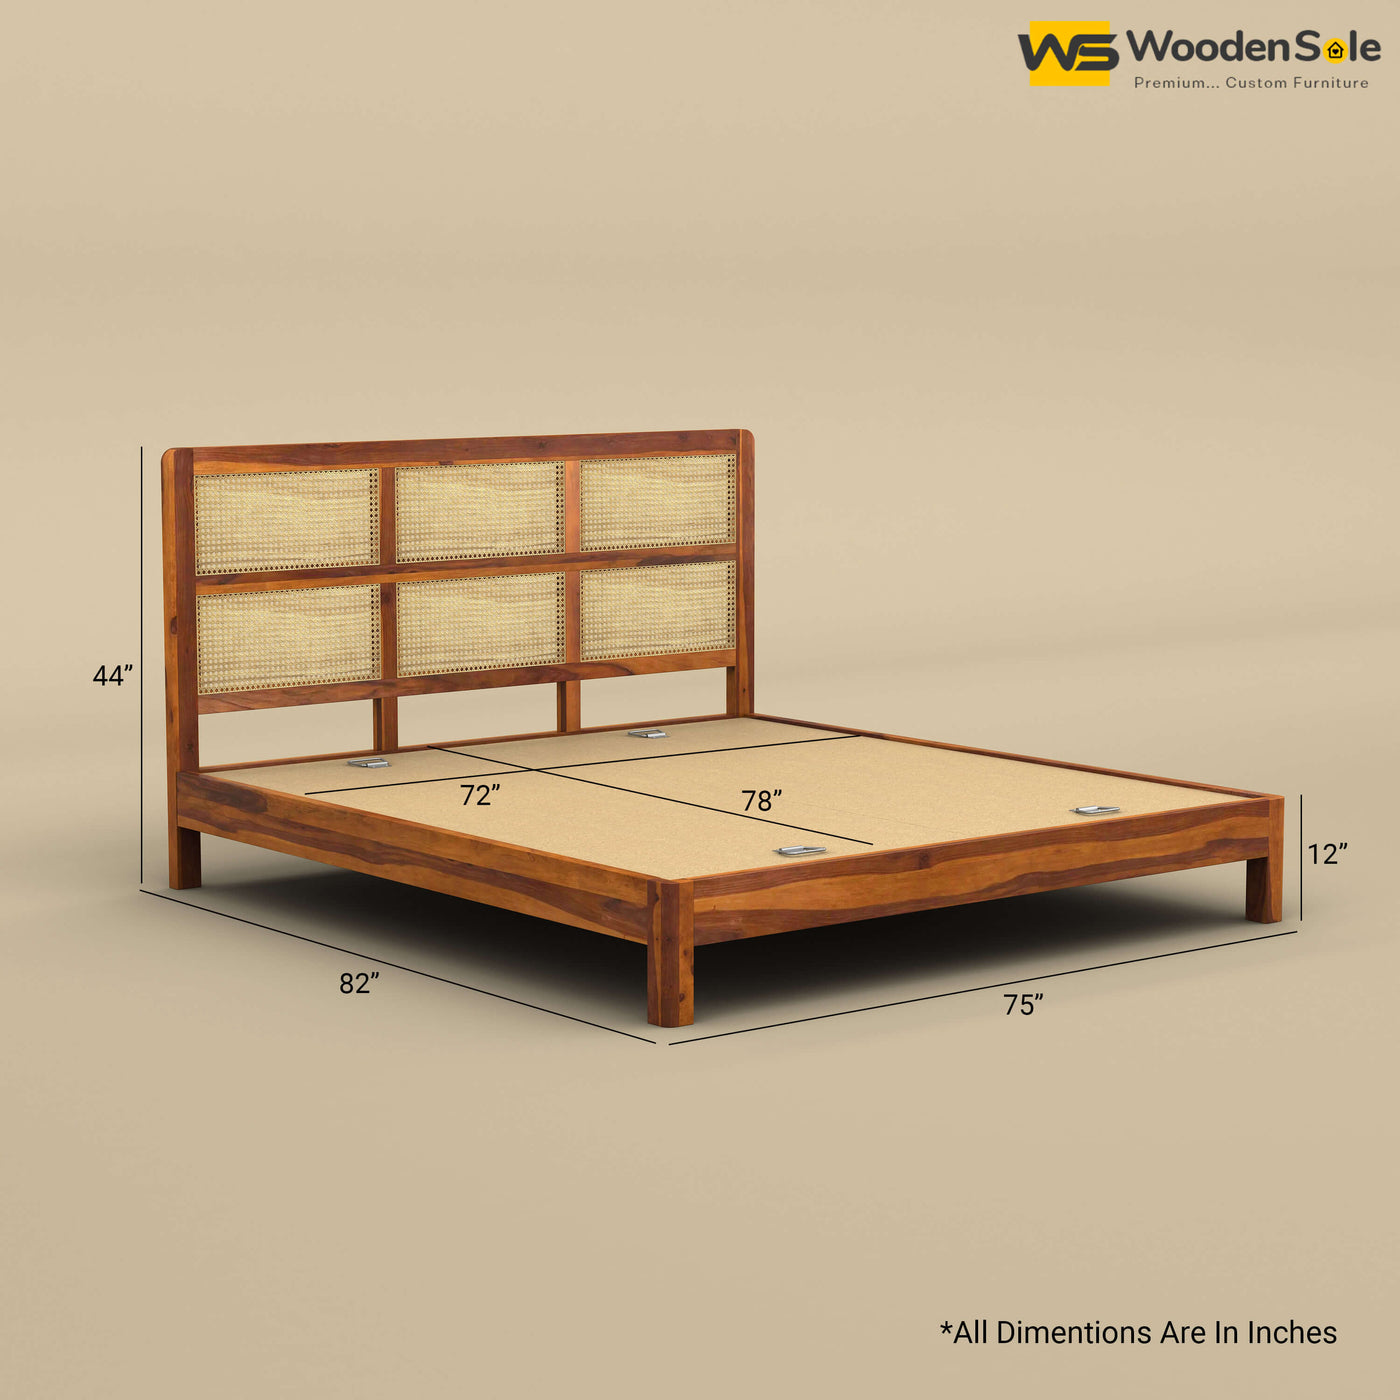 Wooden Rattan Platform Bed (King Size, Honey Finish)